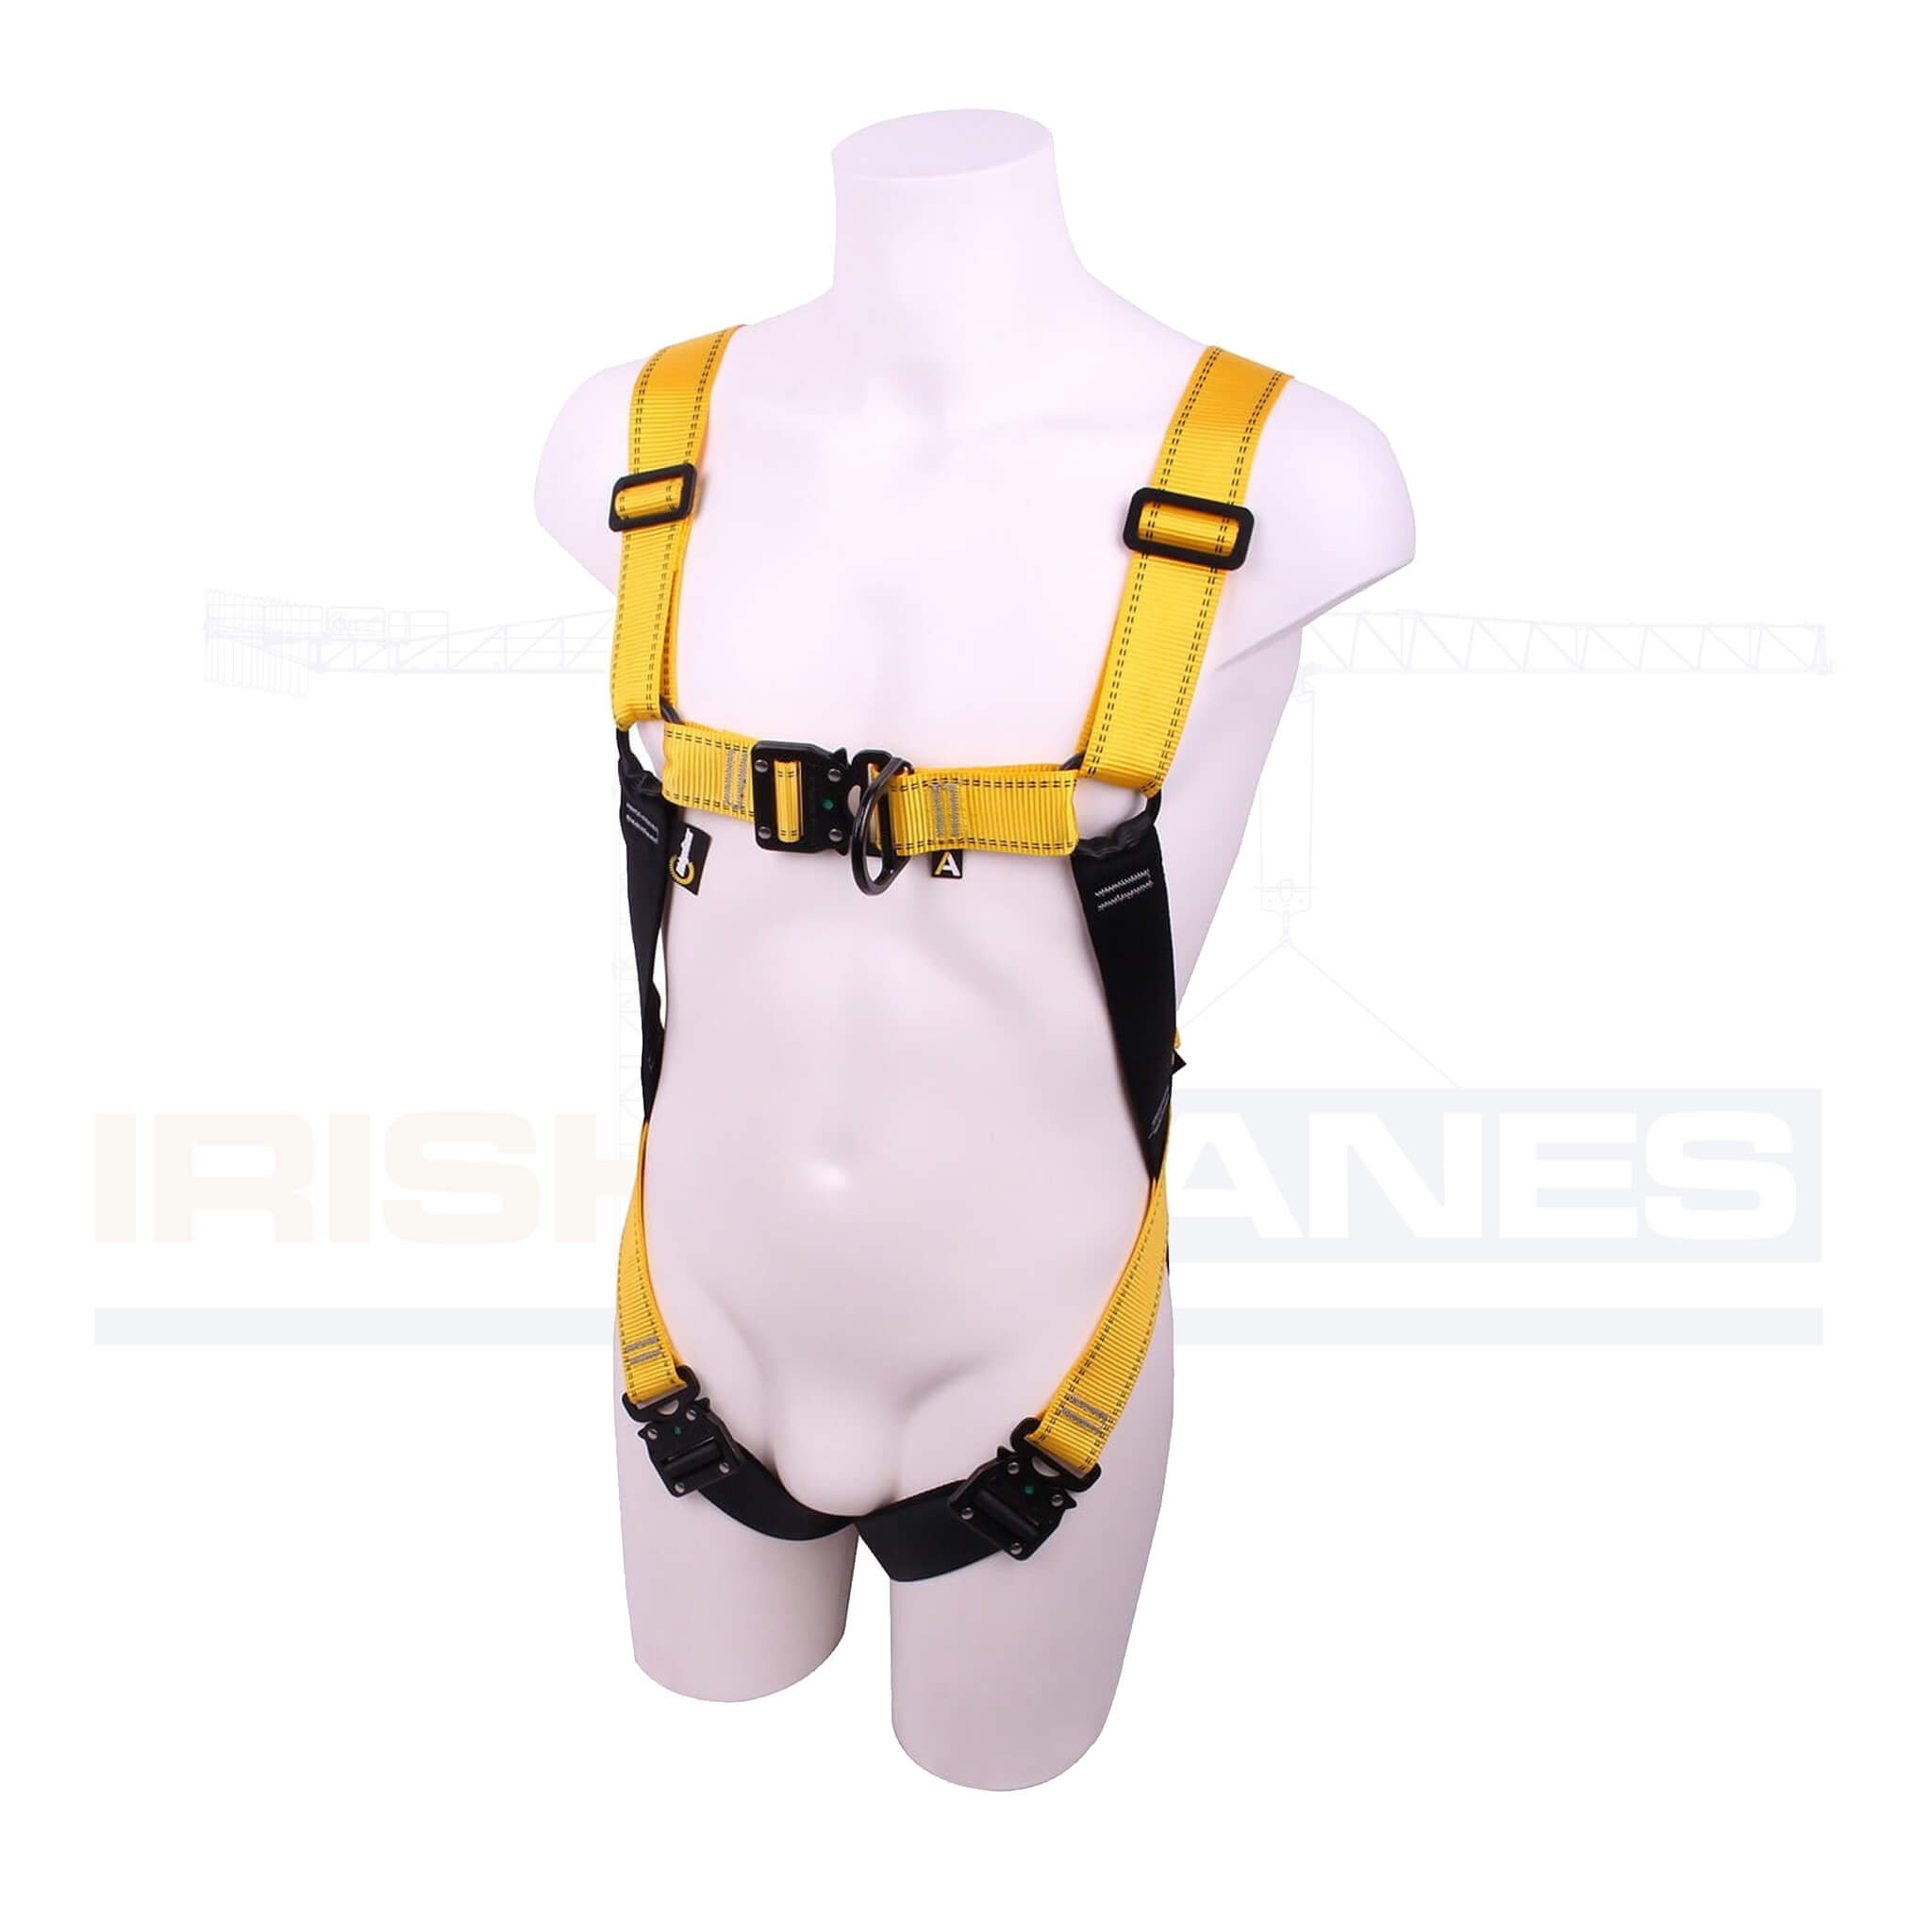 Ridgegear 2 point safety harness front